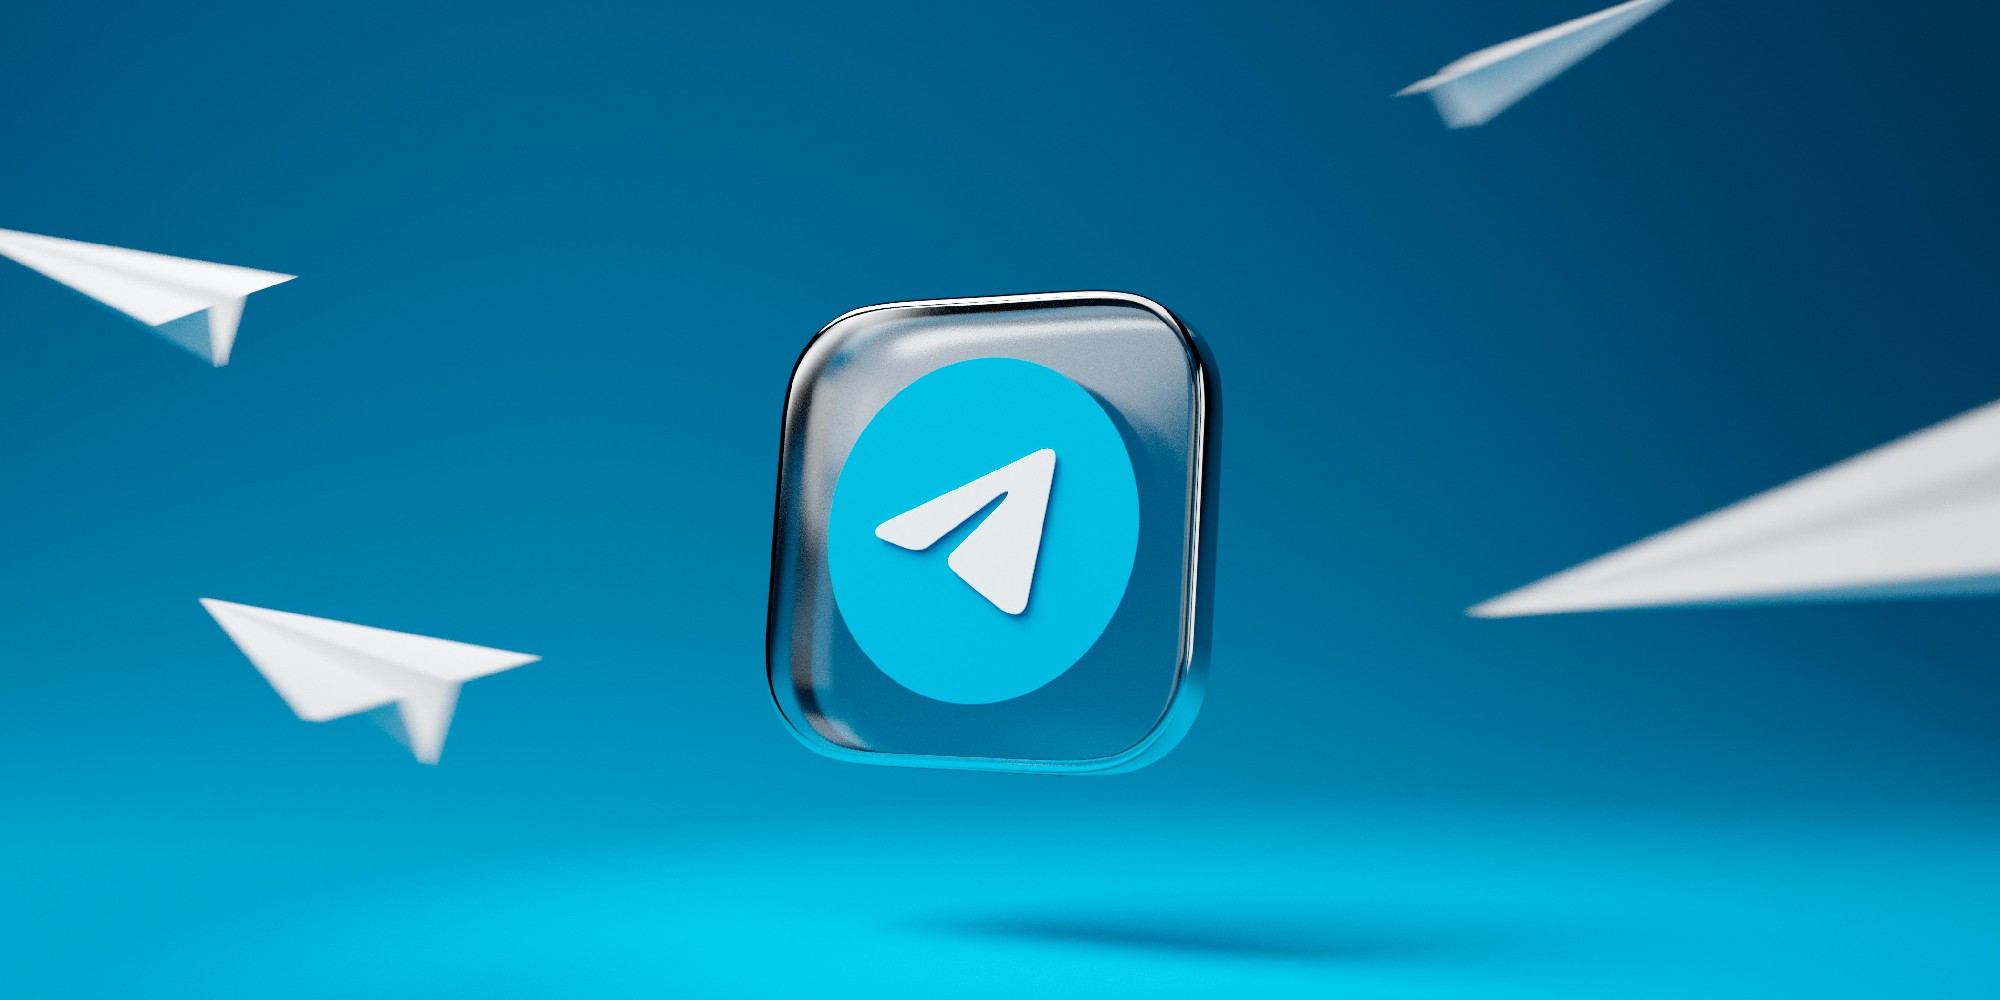 CEO de Telegram apelará decisión de suspensión en Brasil